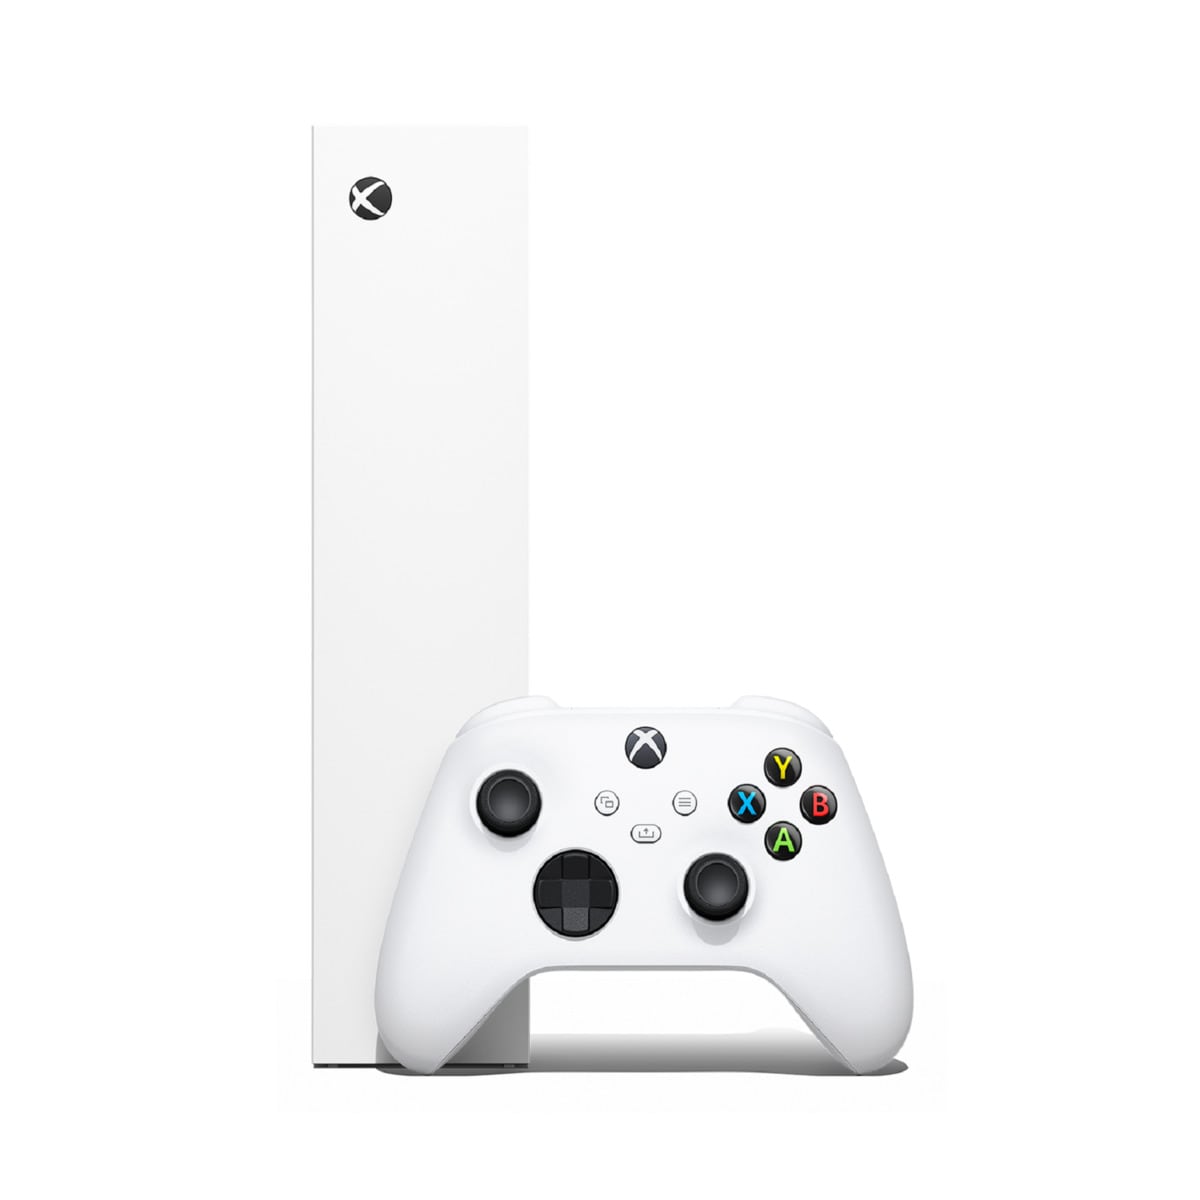 Microsoft 微軟 Xbox Series S 遊戲主機 (512GB) - Fever Electrics 電器熱網購平台